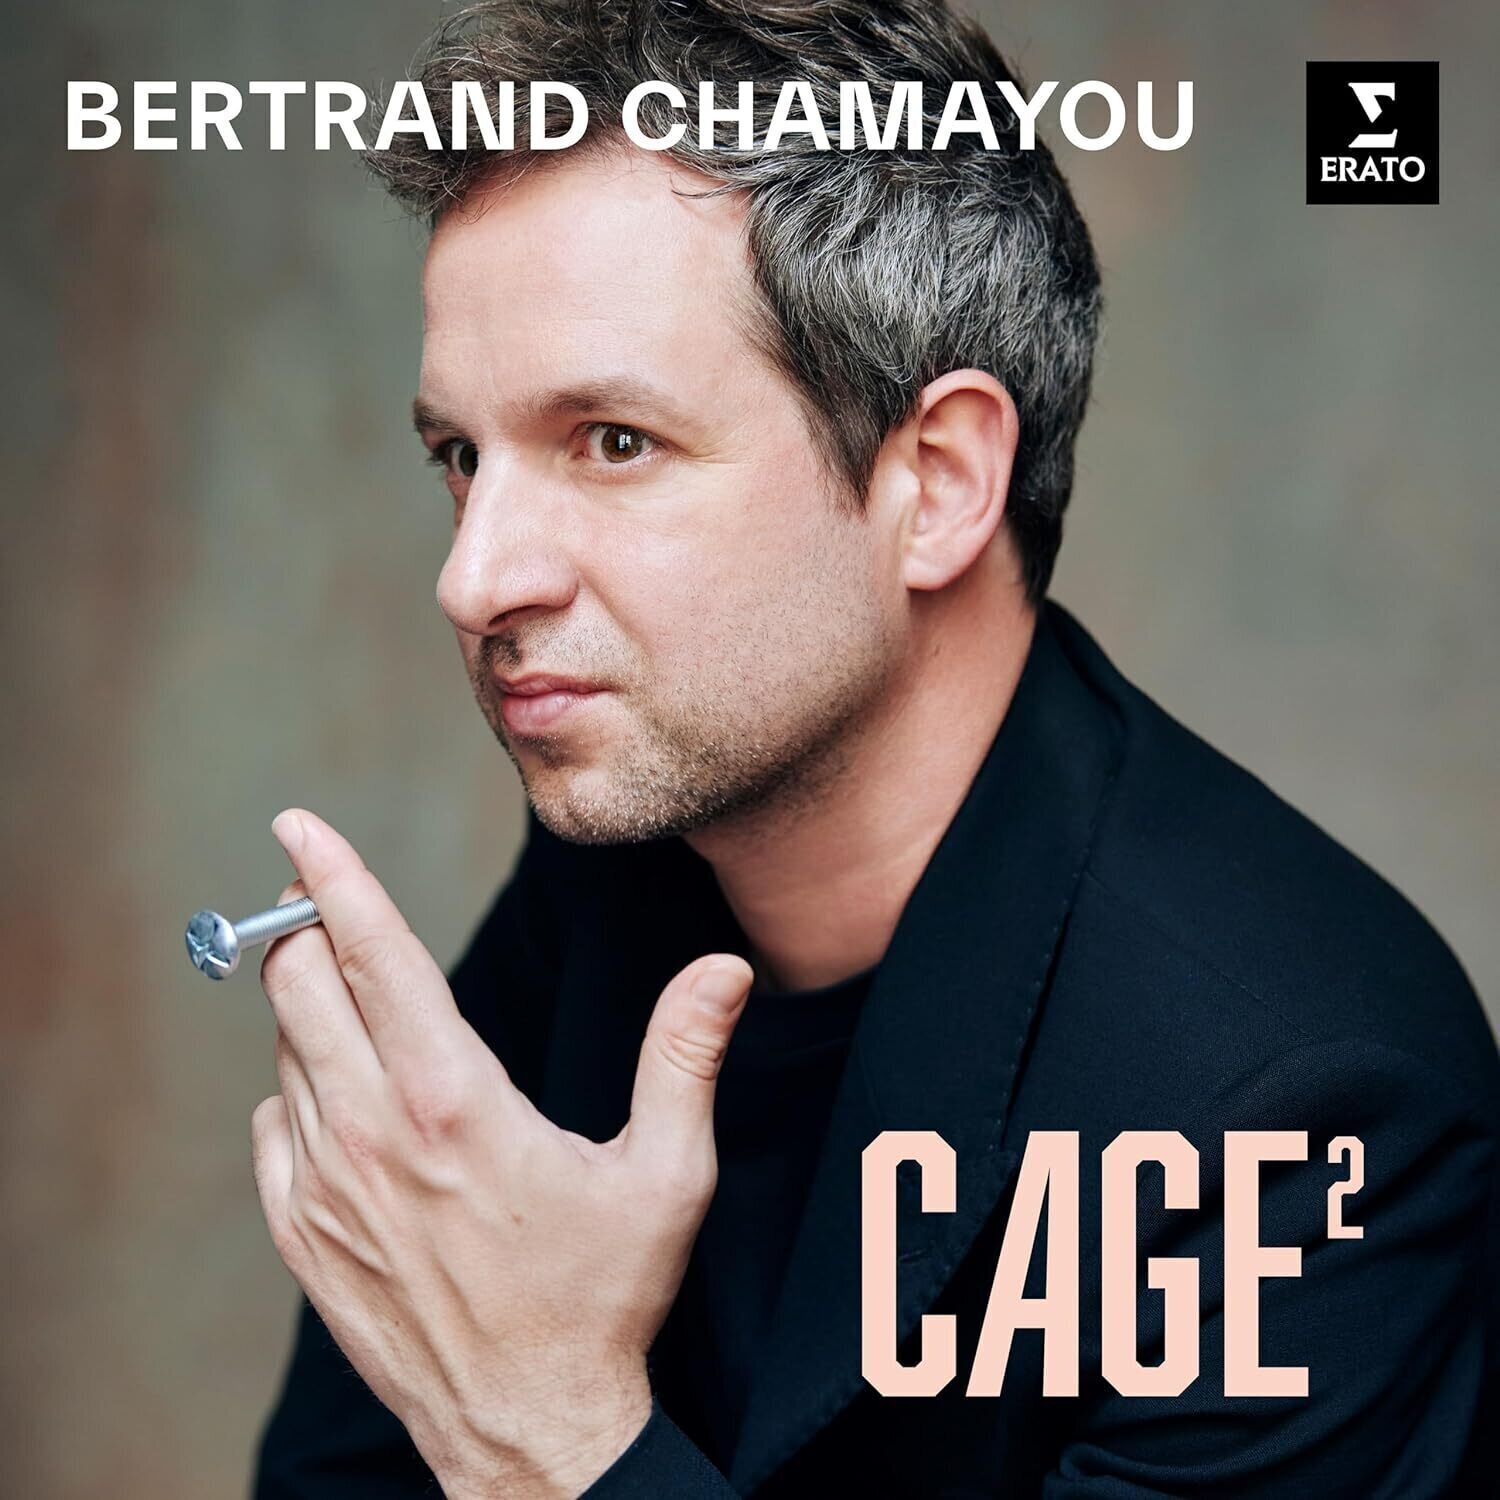 Muzyczne CD Bertrand Chamayou - Cage2 (CD)